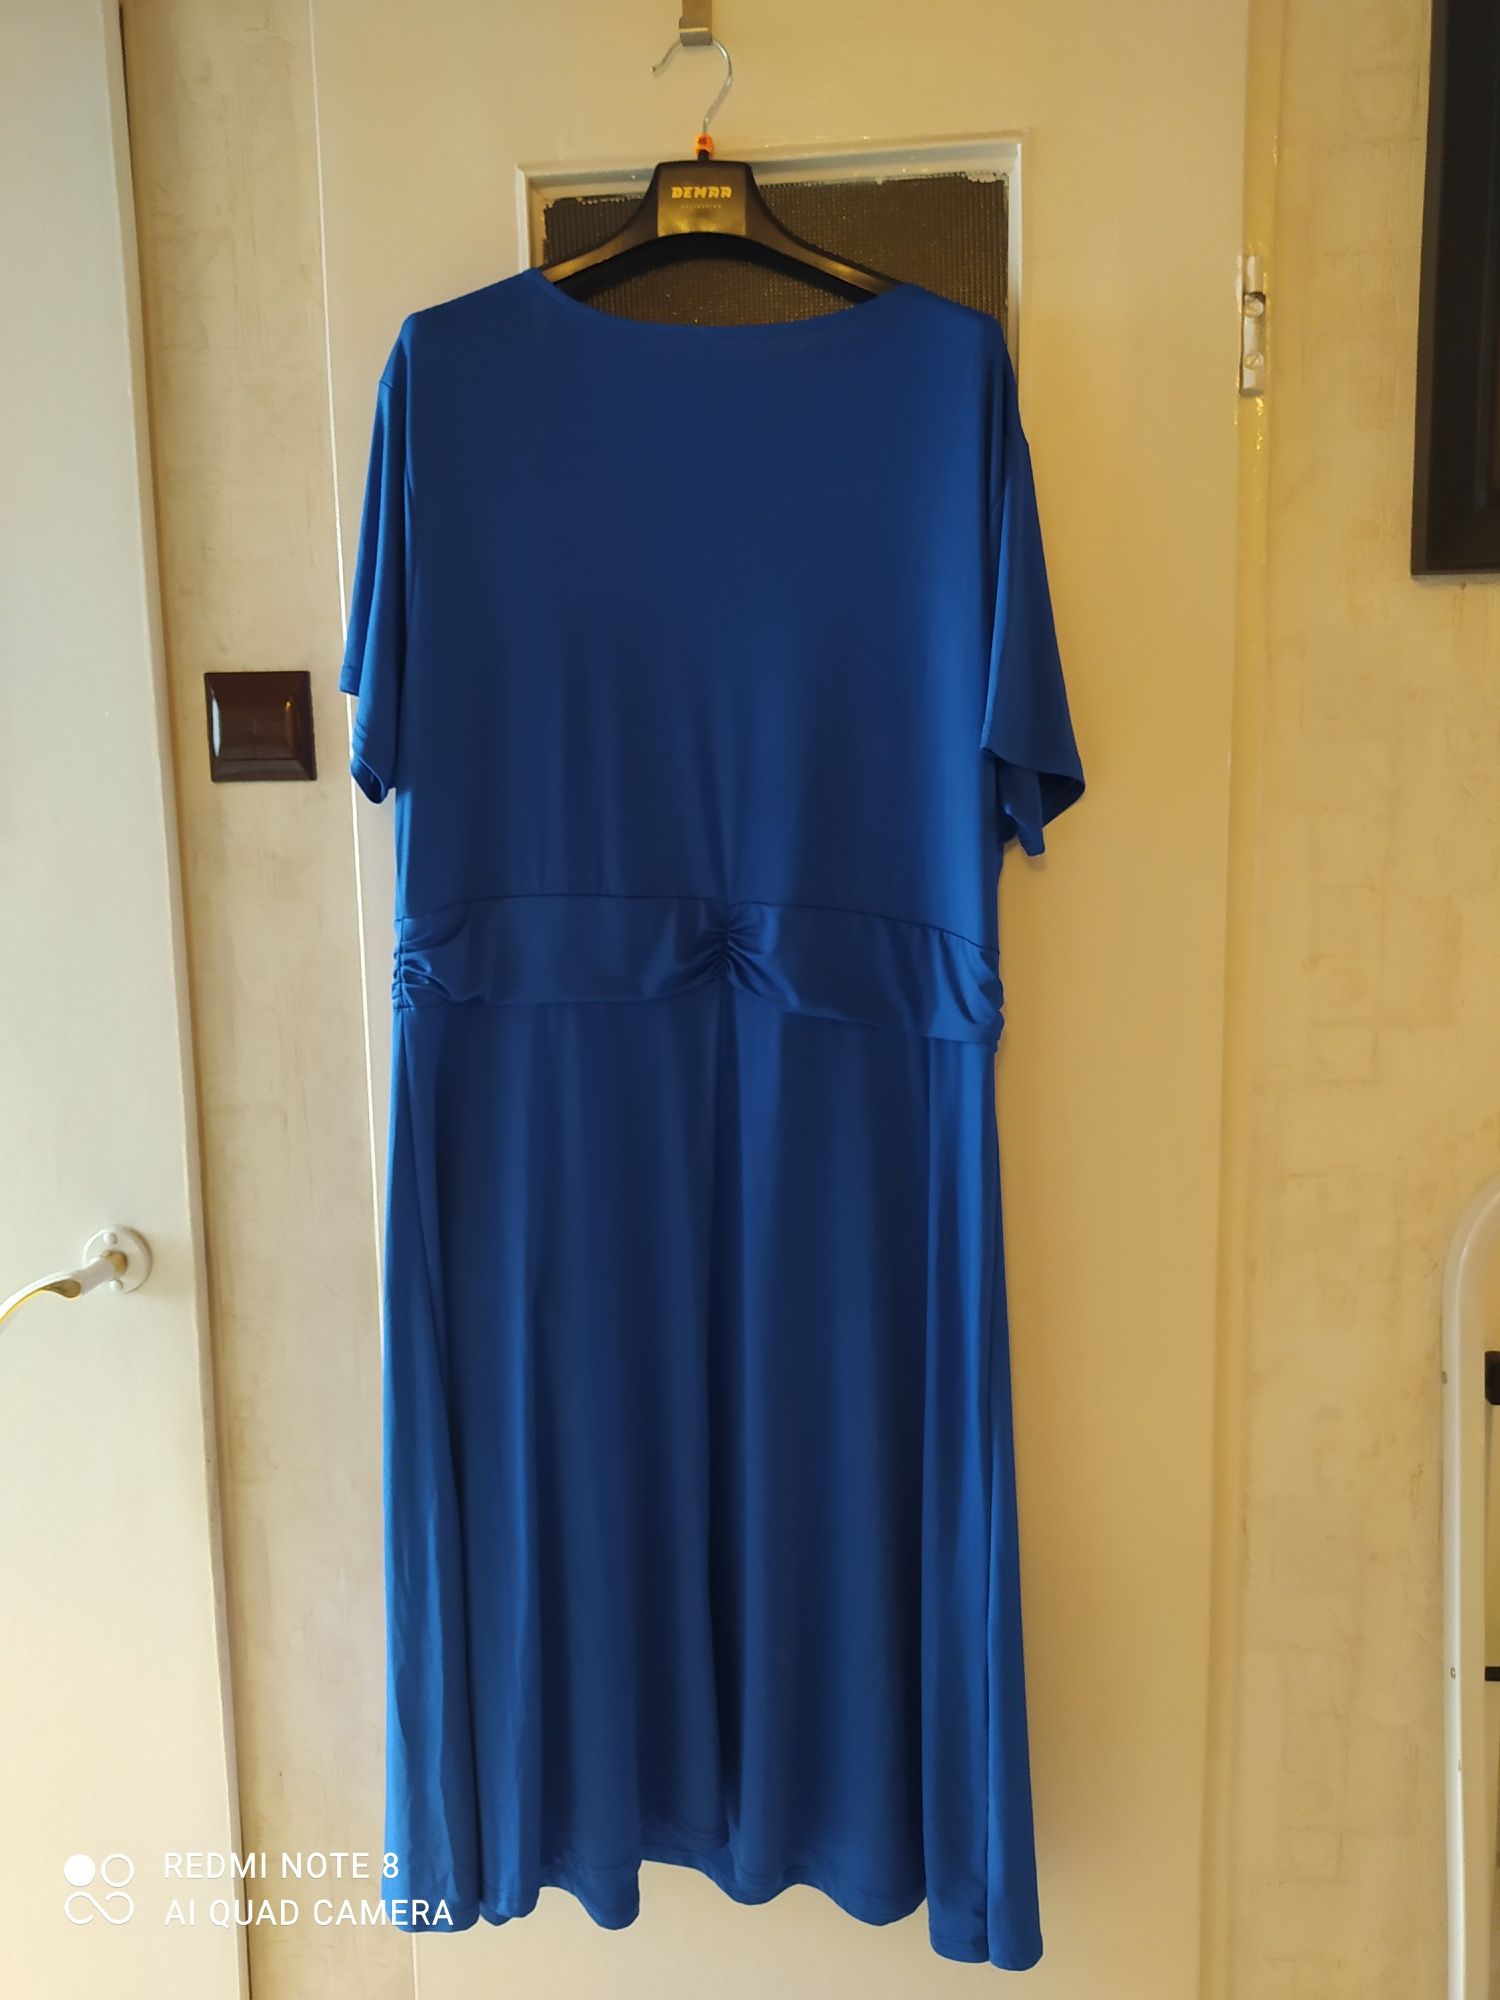 Duża sukienka niebieska ..5 XL